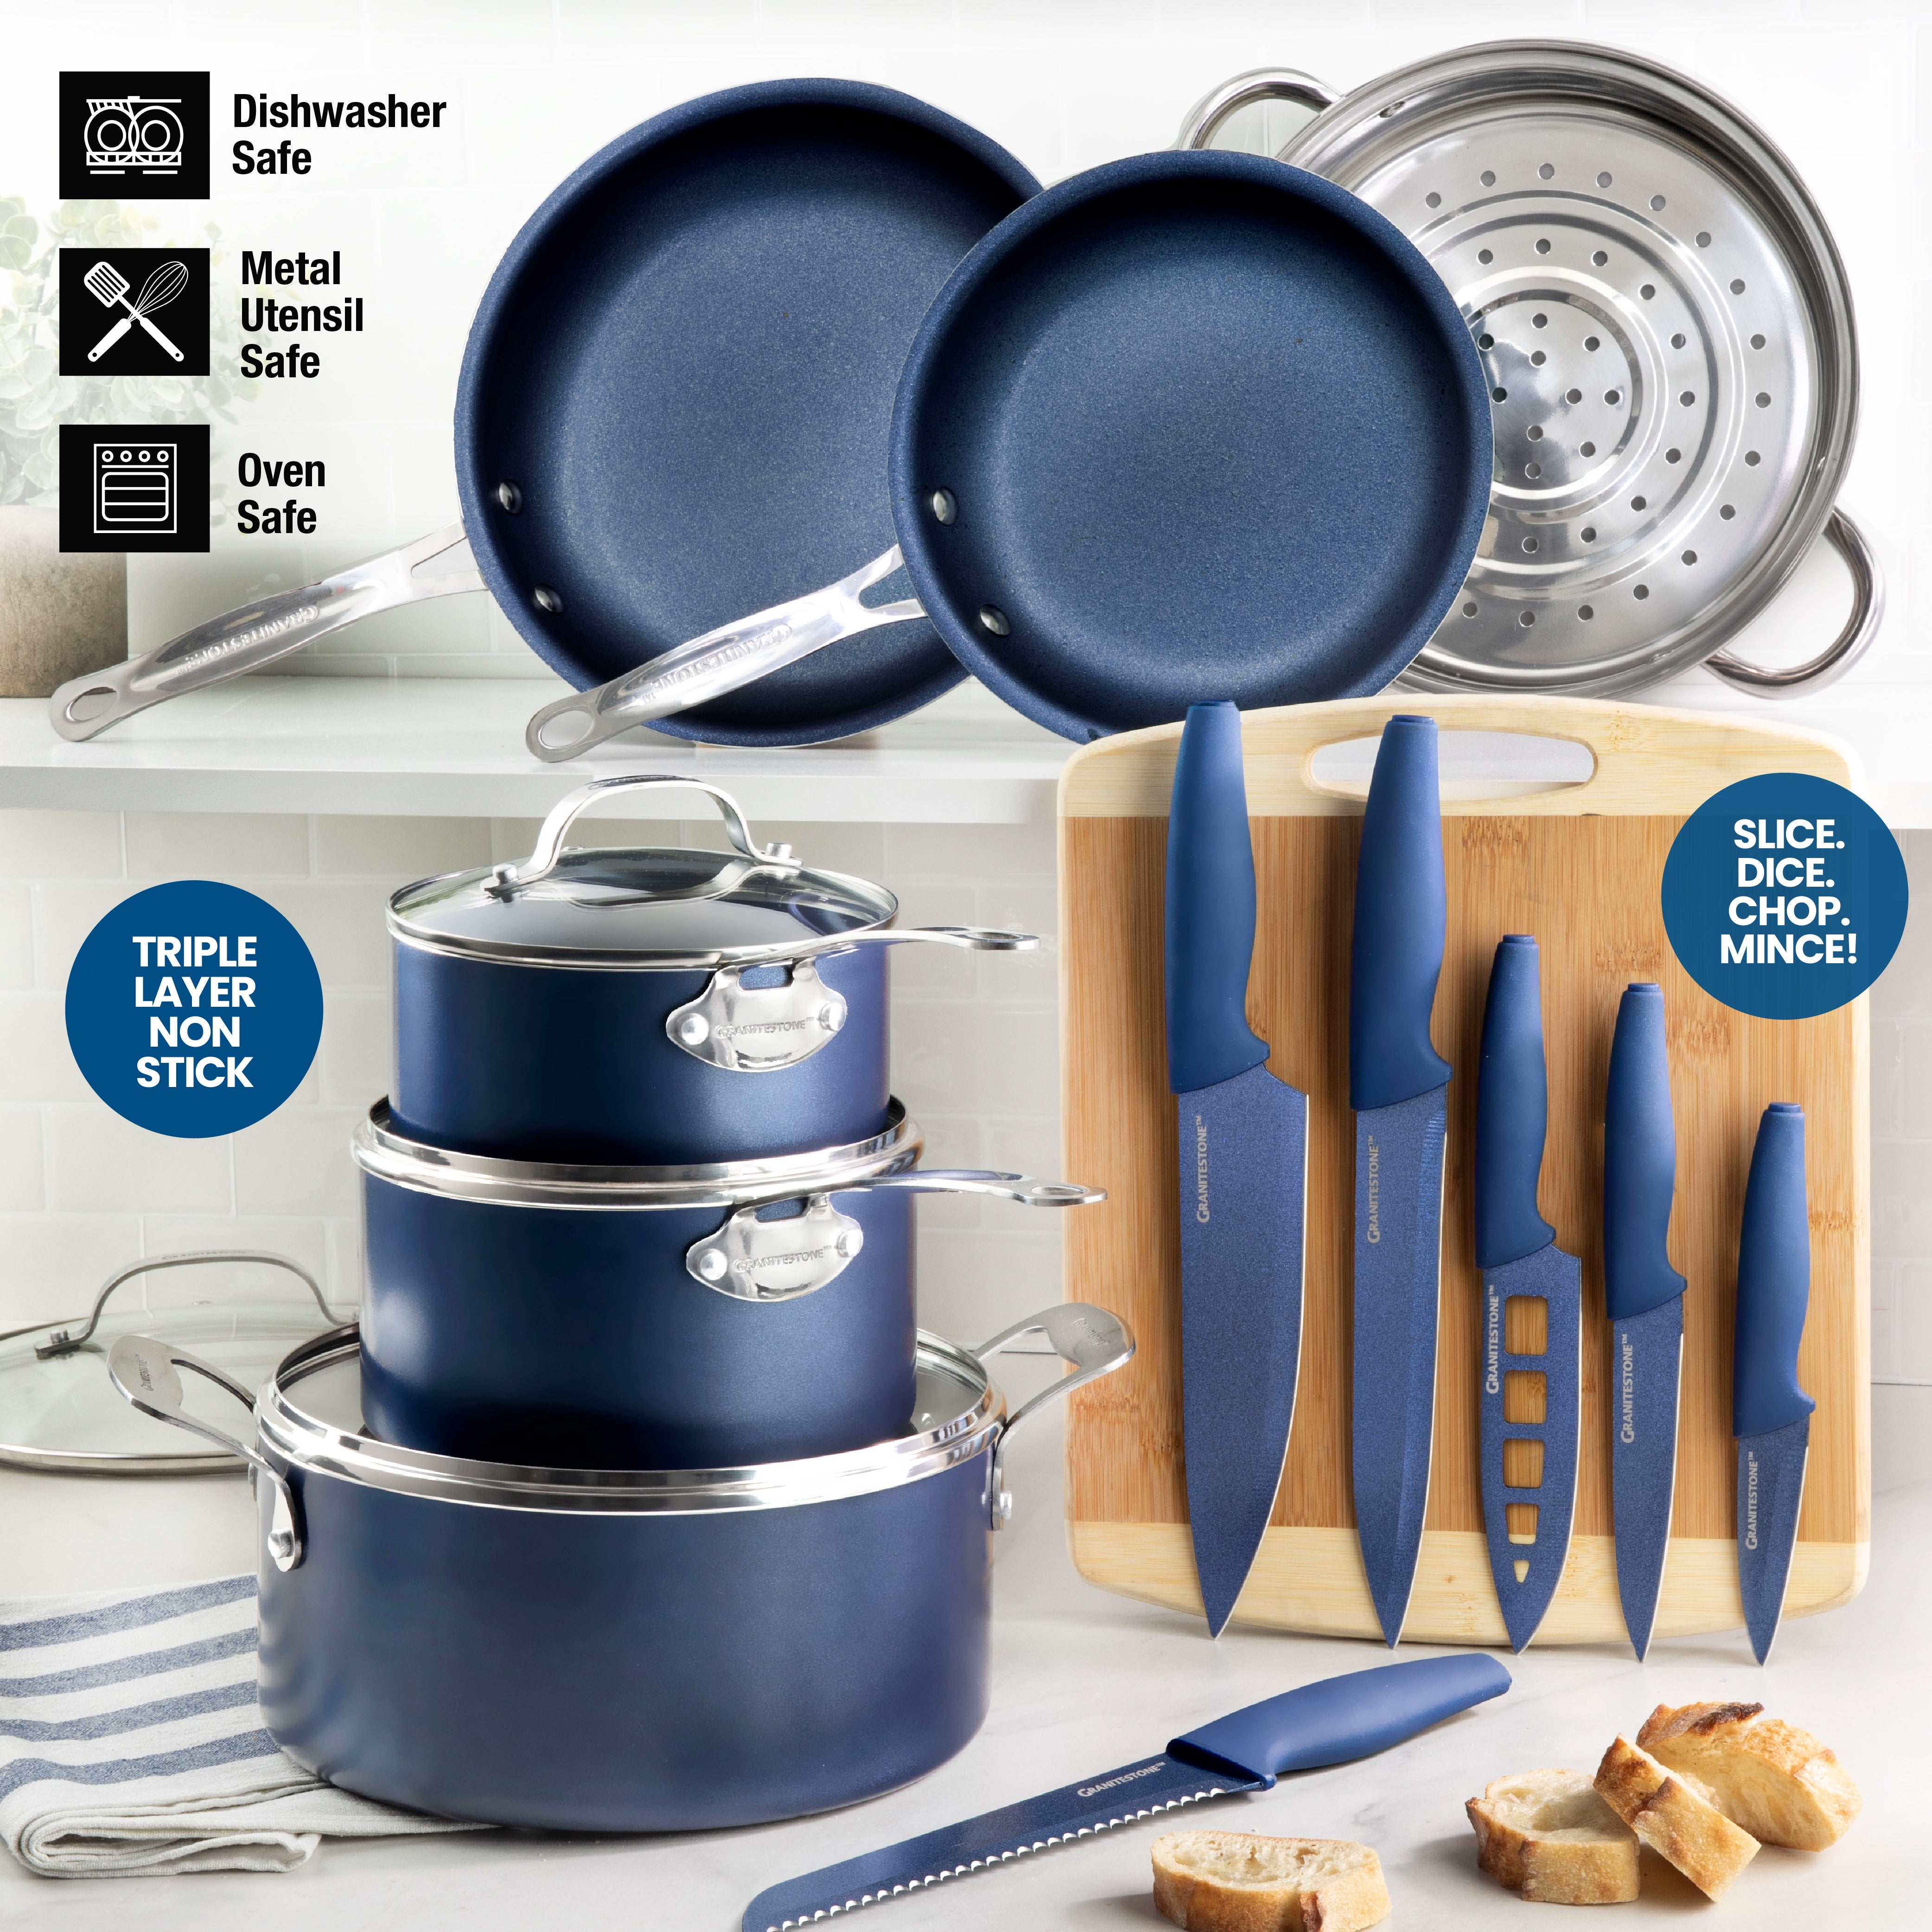 Granite Stone Diamond™ Blue Non-Stick Aluminum Cookware Set, 5 pc